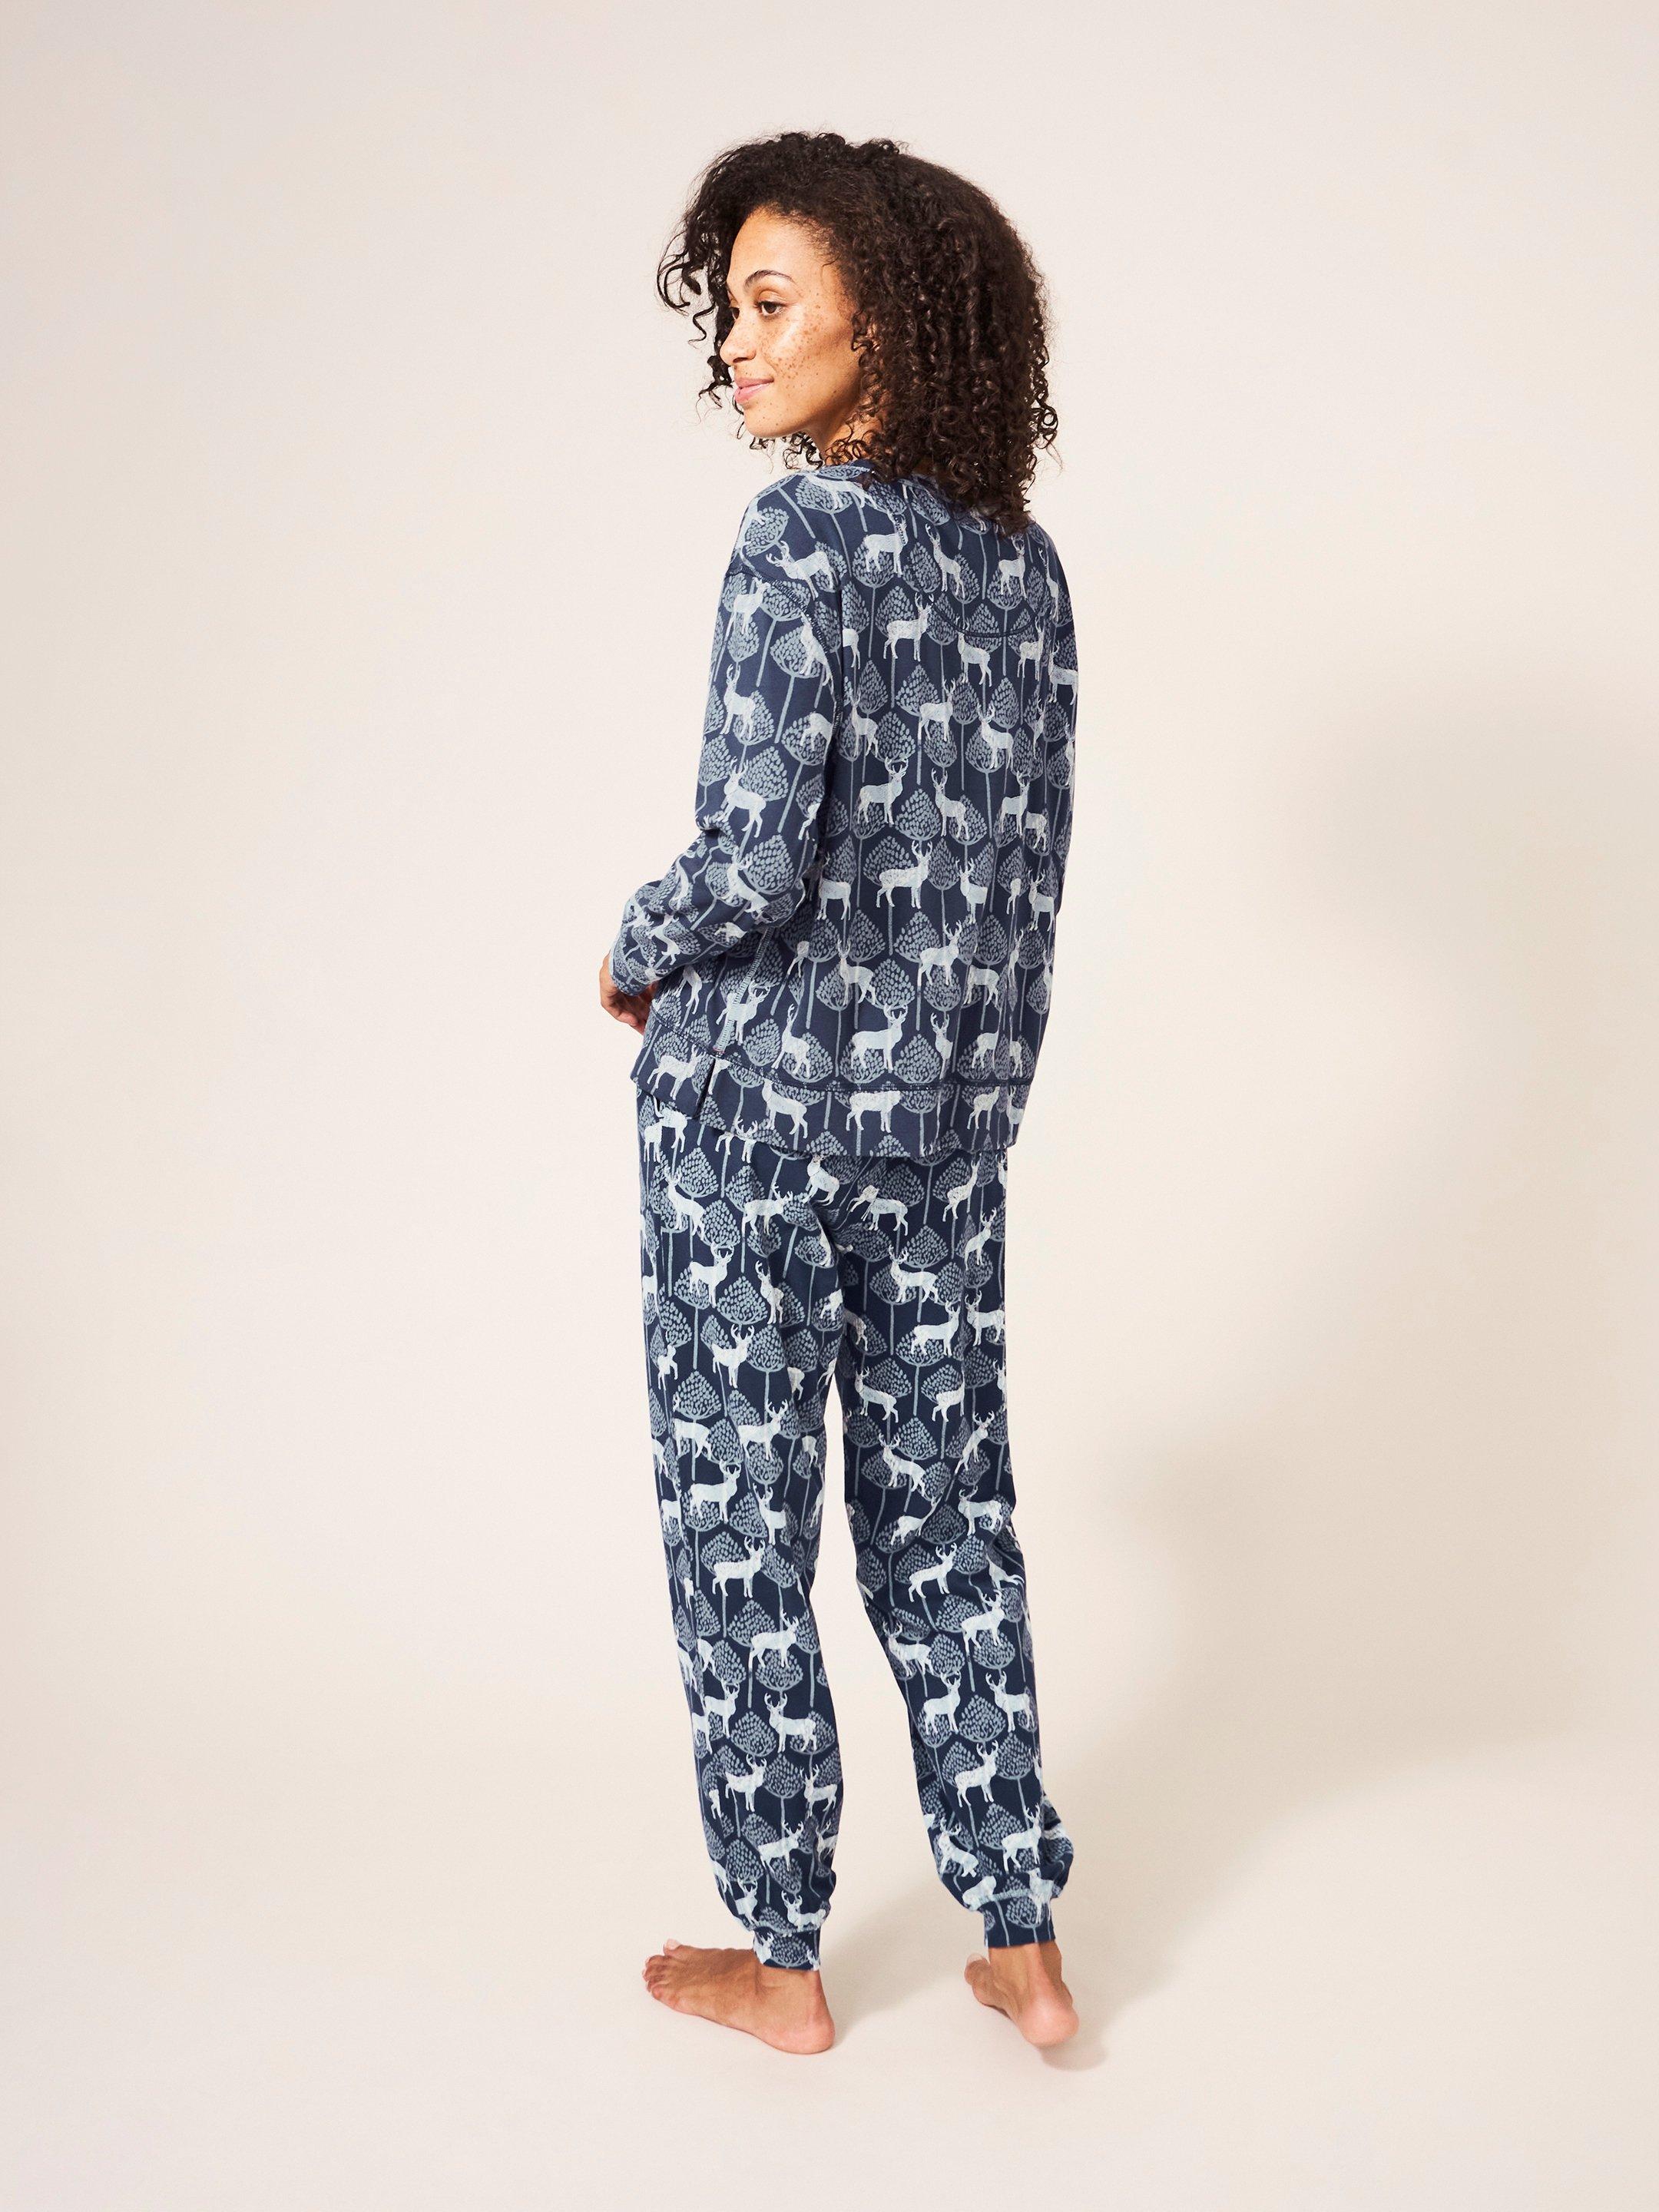 Stag Family Time Jersey Pyjama Top in NAVY MULTI - MODEL BACK